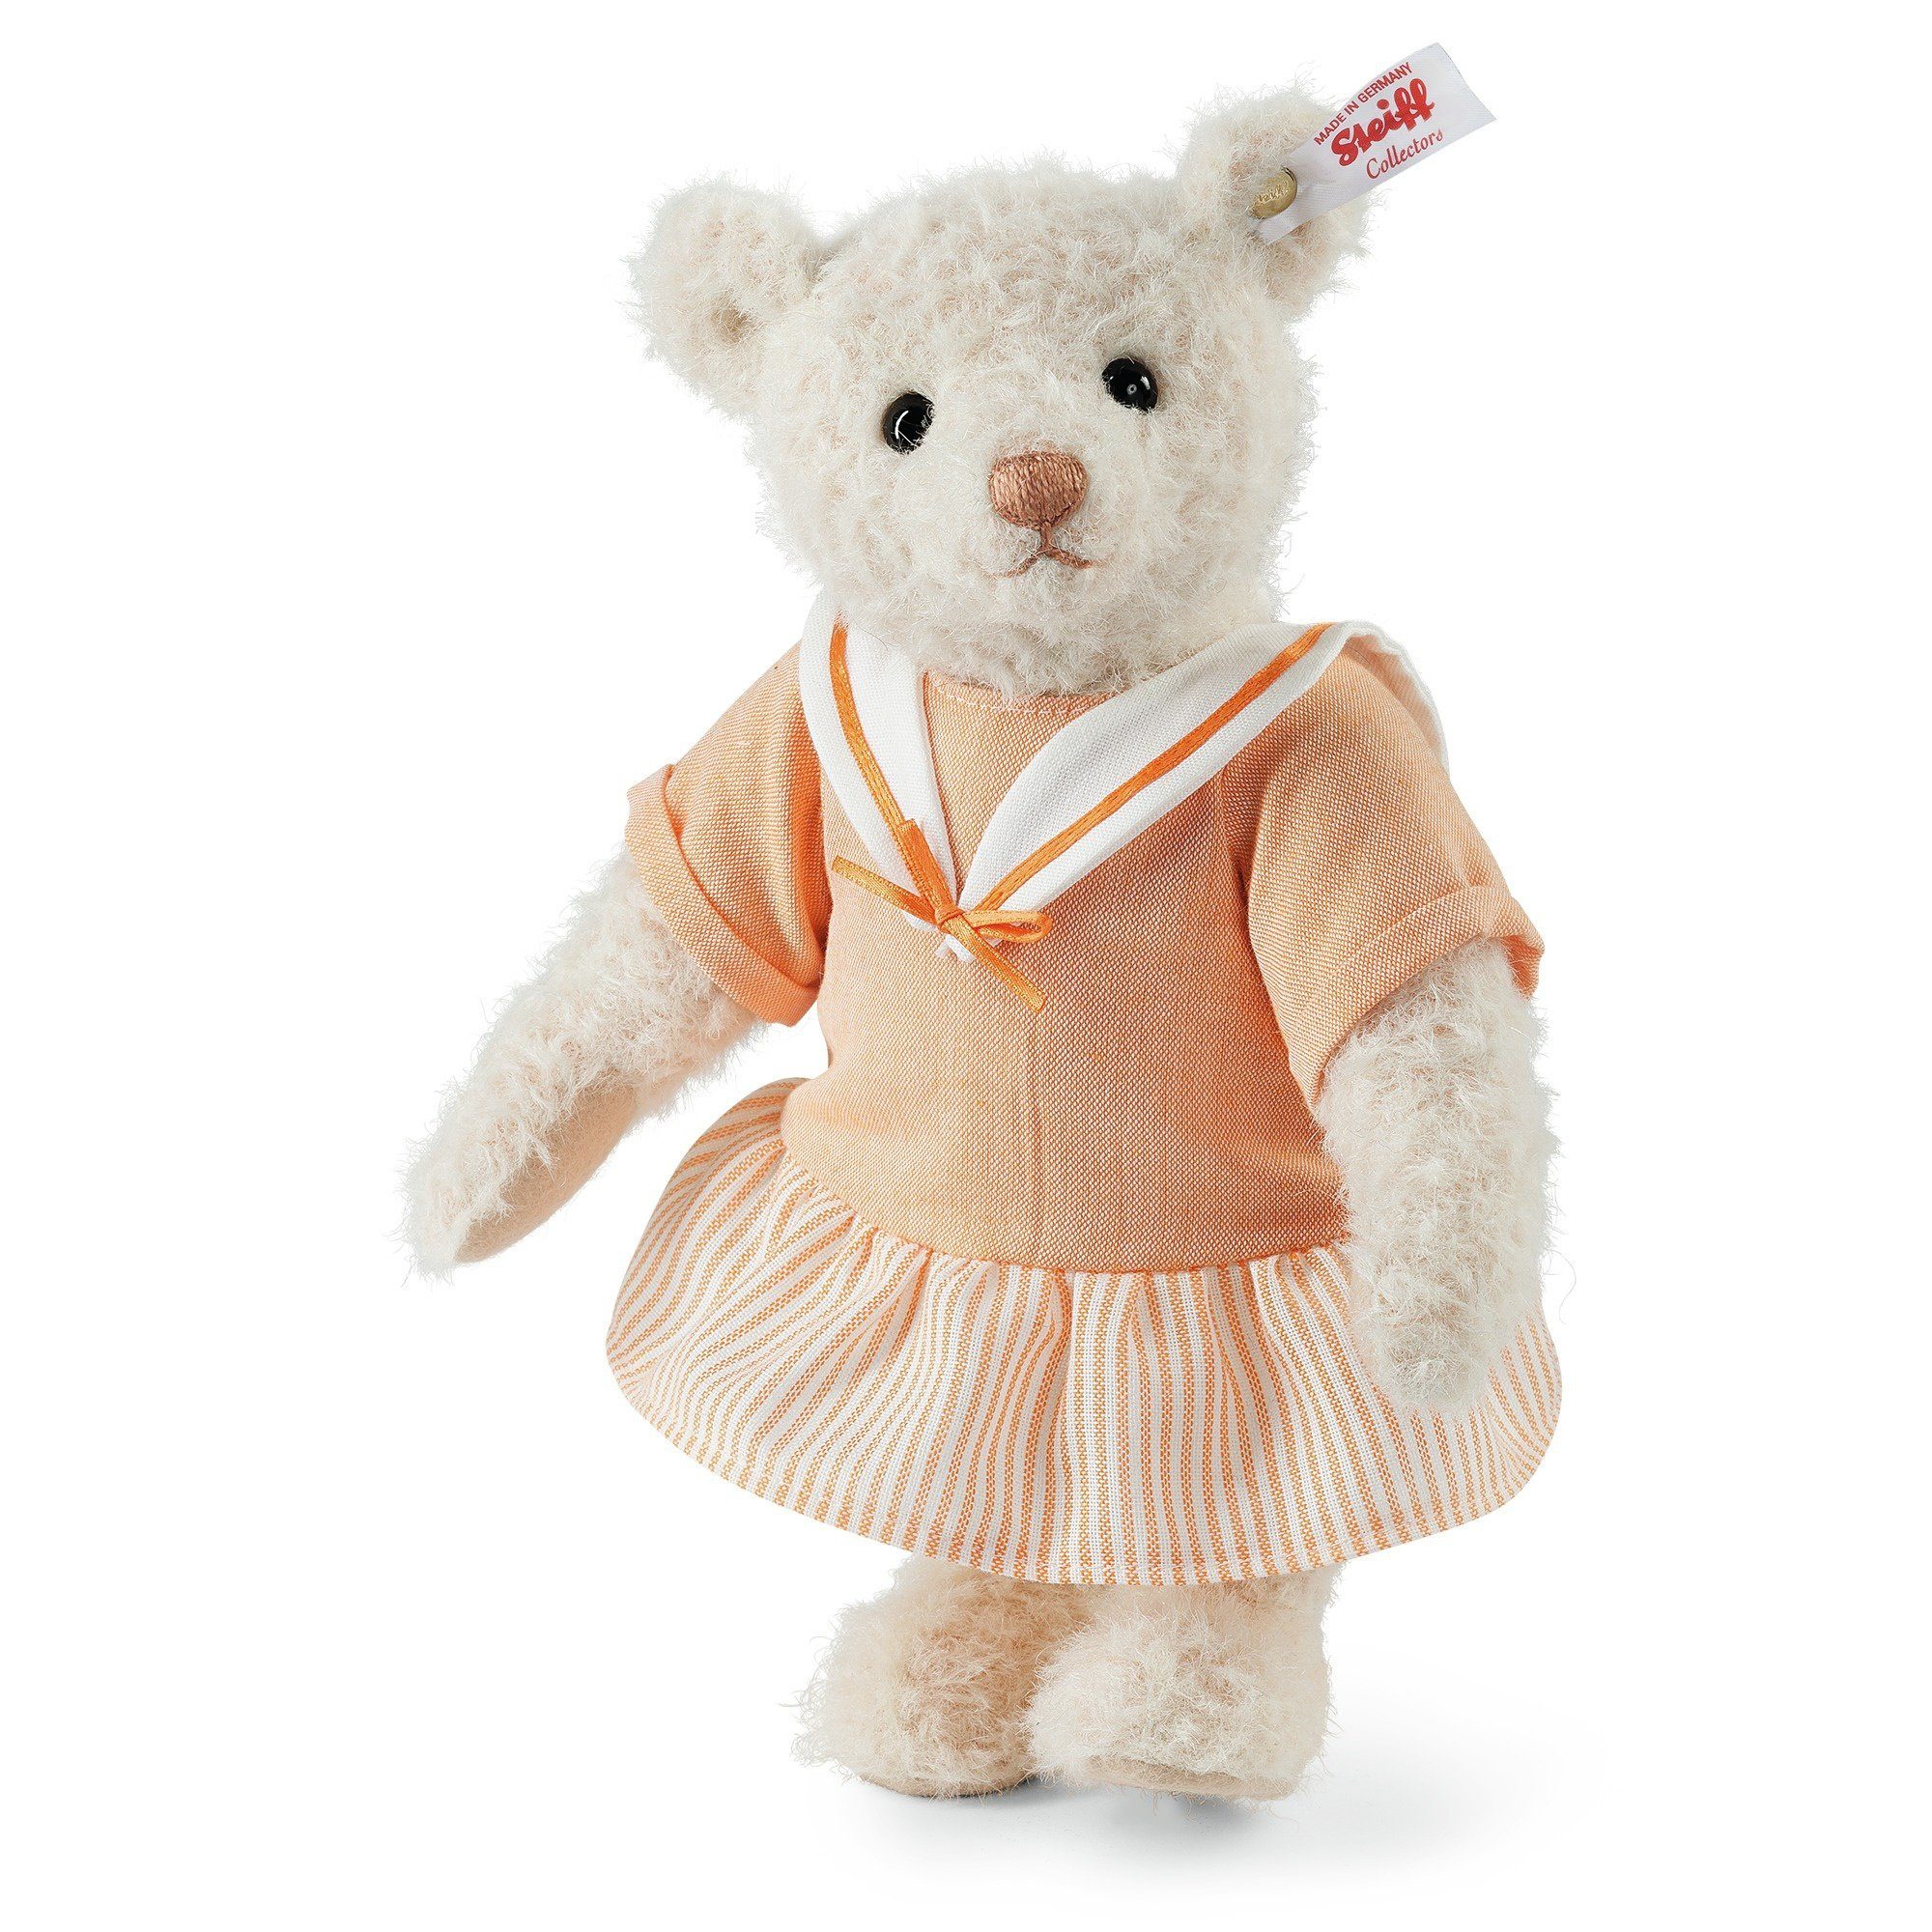 Steiff Dekofigur Teddybär Edith weiß mit Kleid orange 24 cm Steiffbär 0150239